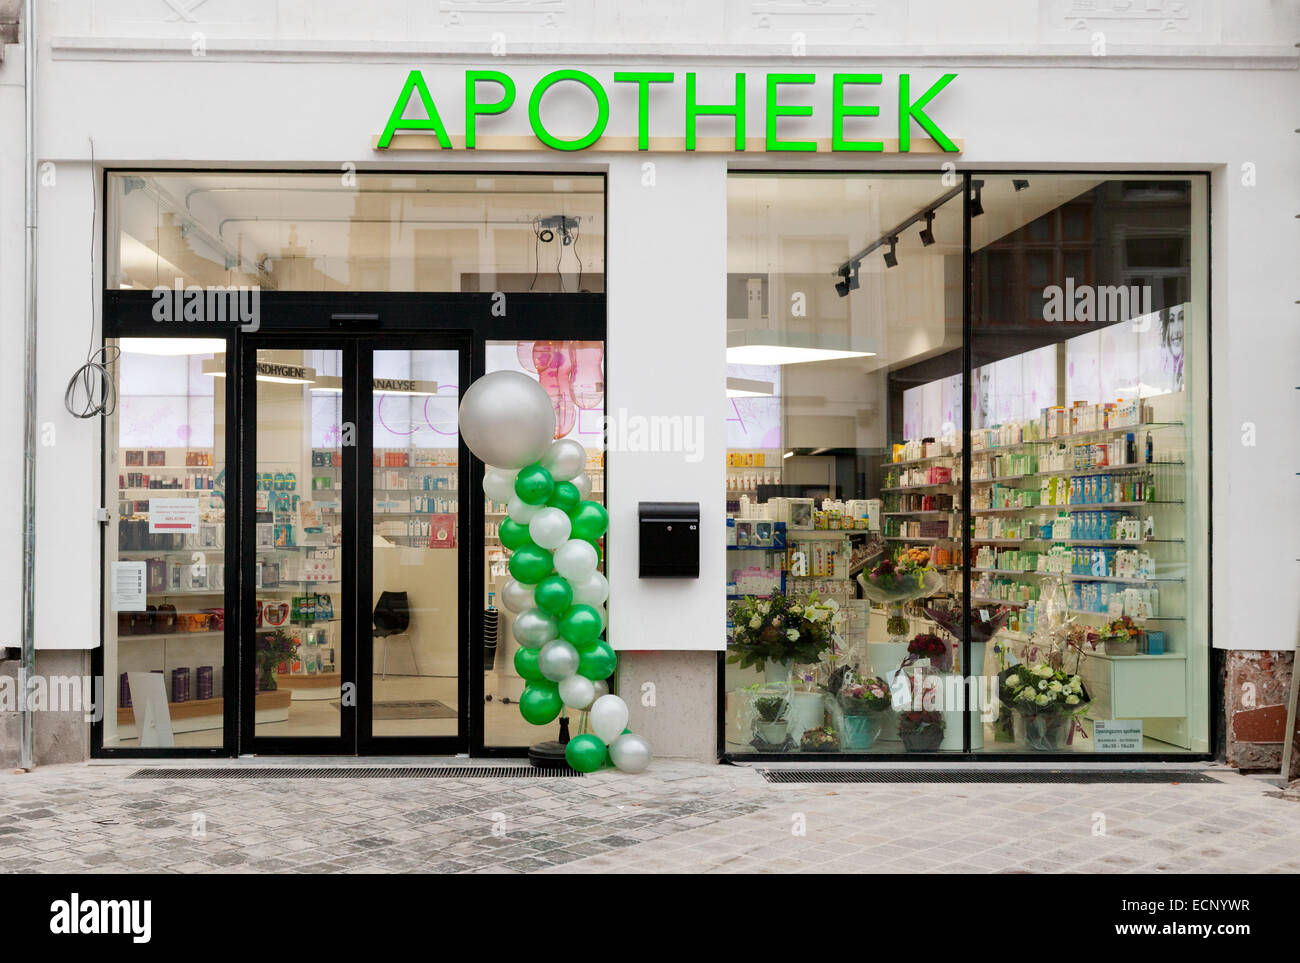 Apotheek, a belgian pharmacy, chemist shop, Ghent, Belgium Europe Stock Photo